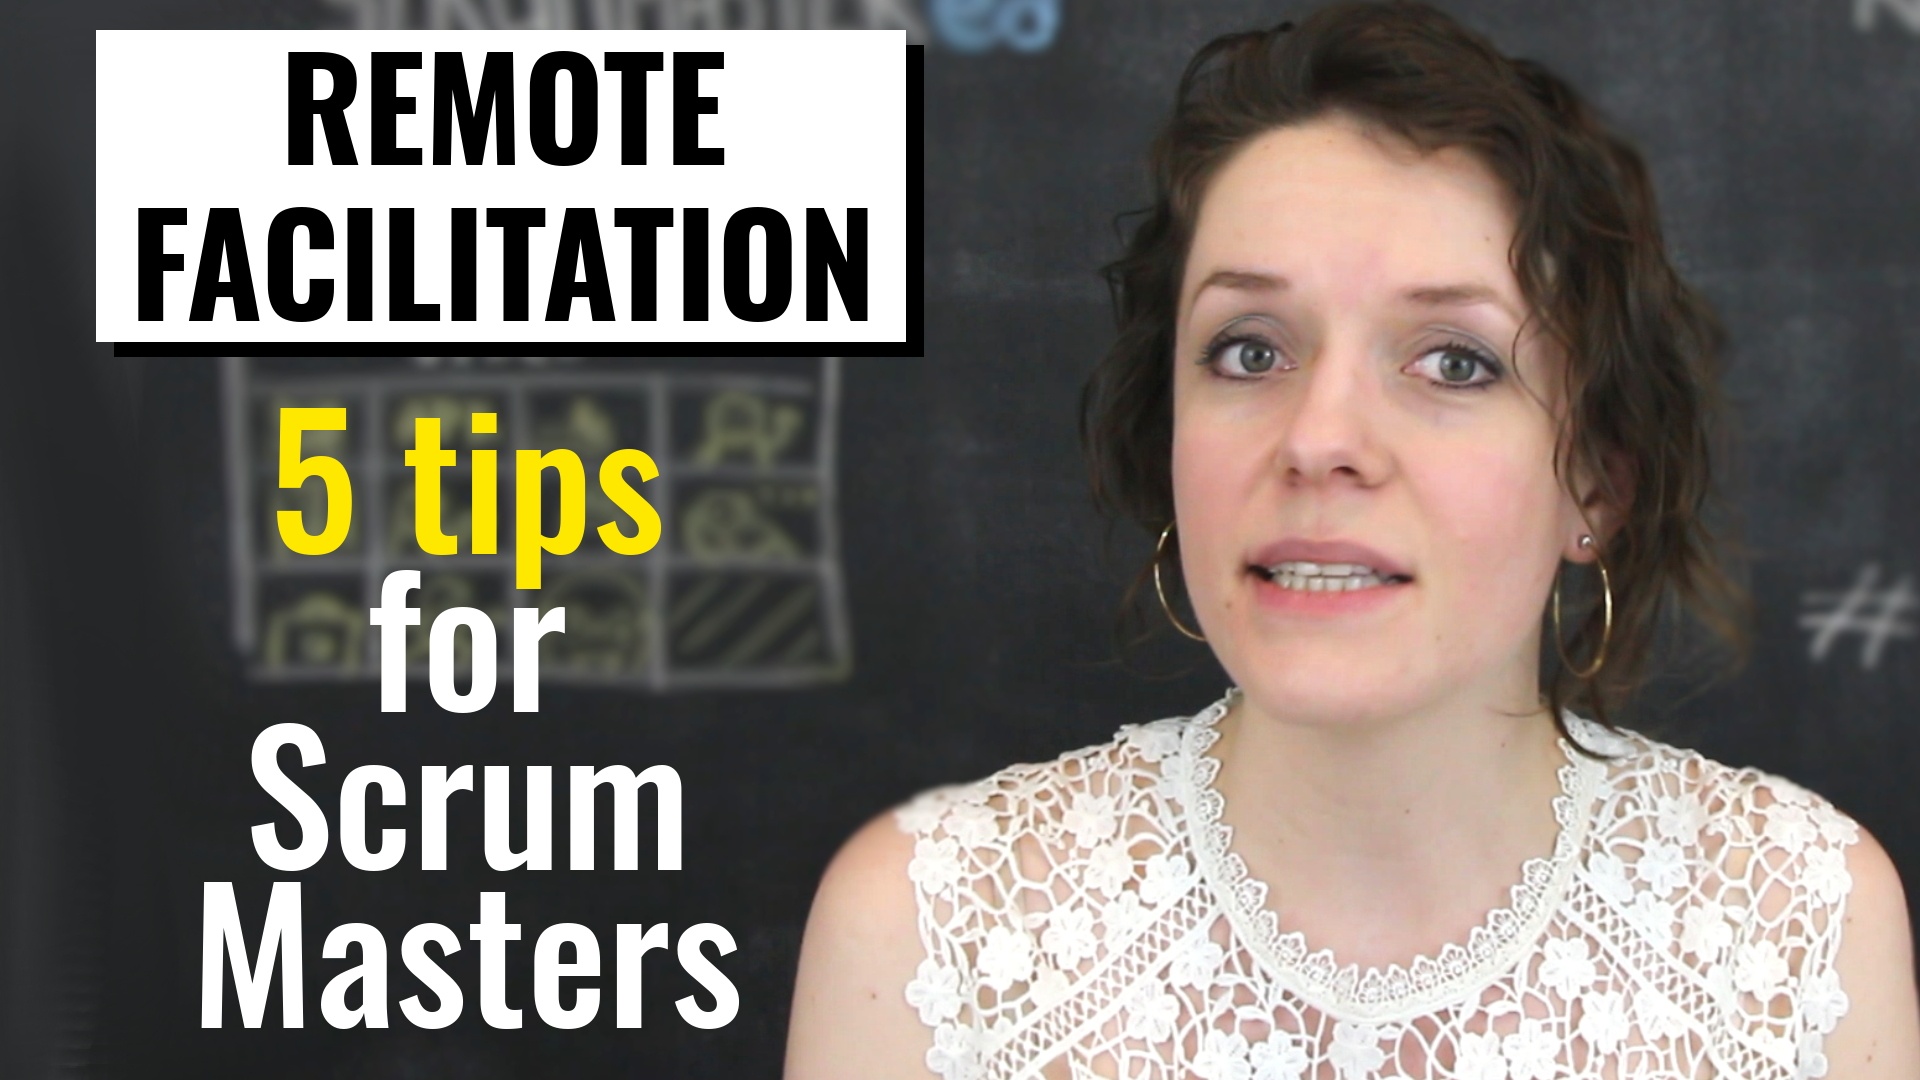 Remote Facilitation Tips for Scrum Masters